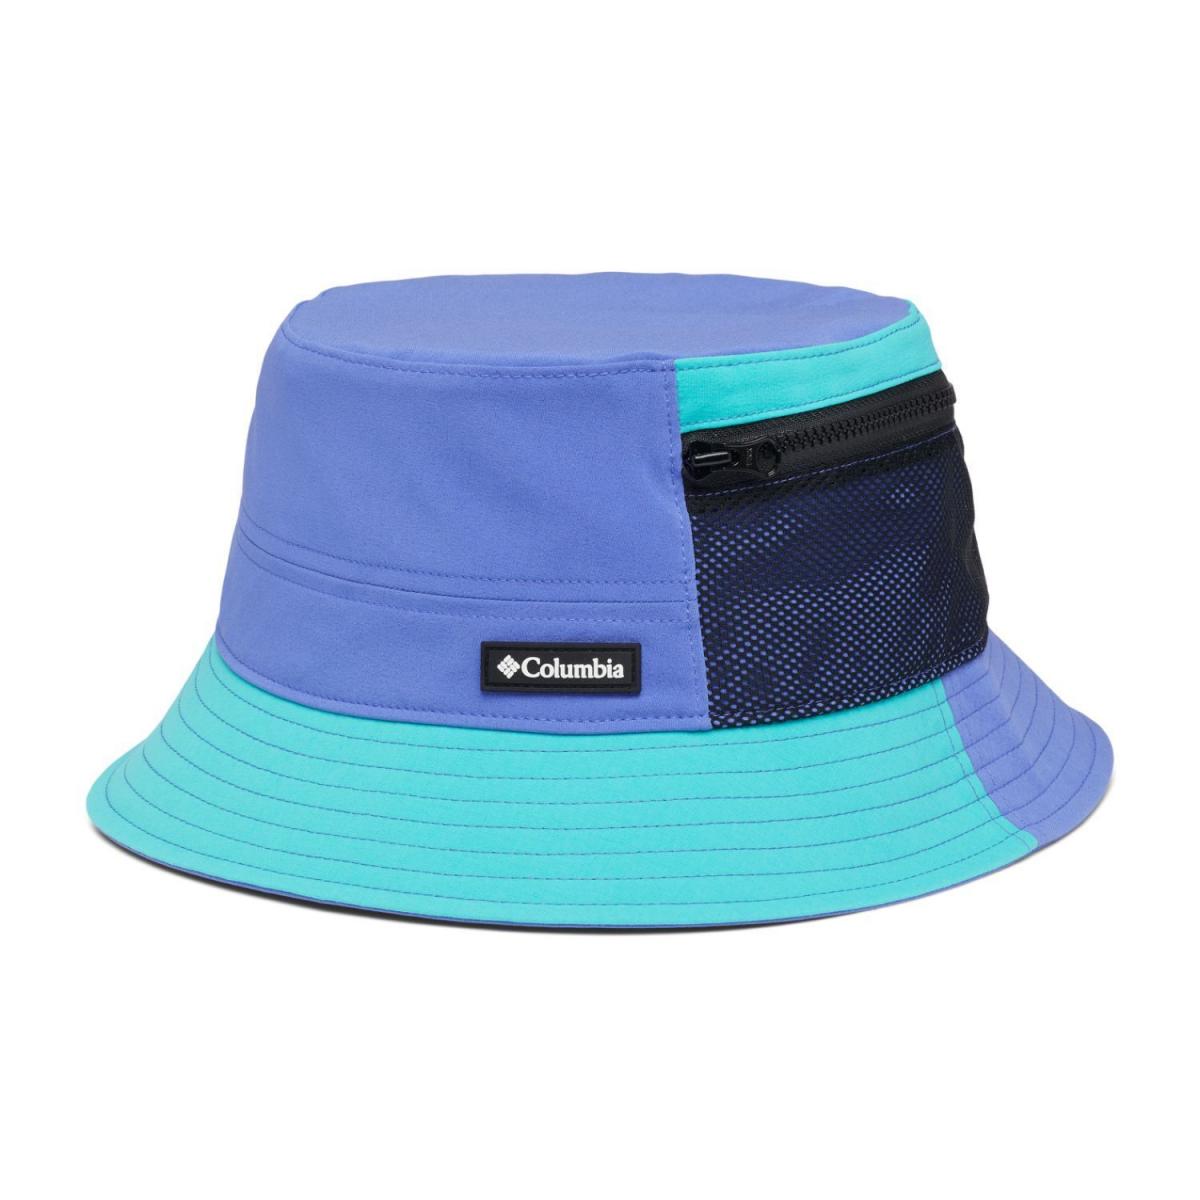 COLUMBIA, COLUMBIA TREK BUCKET HAT, Size : S/M